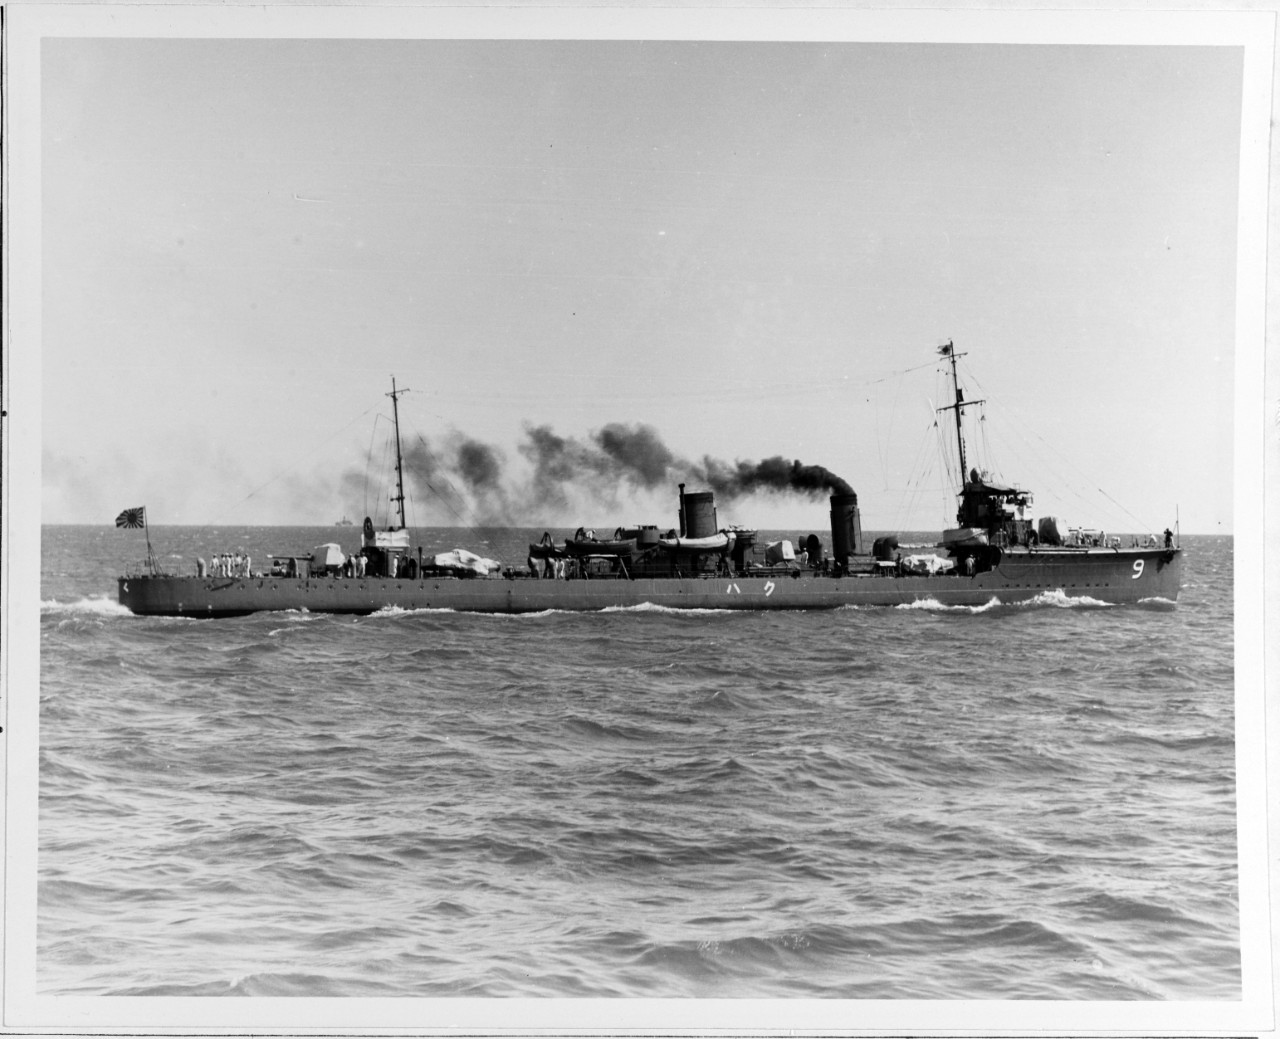 KUHA, Japanese destroyer